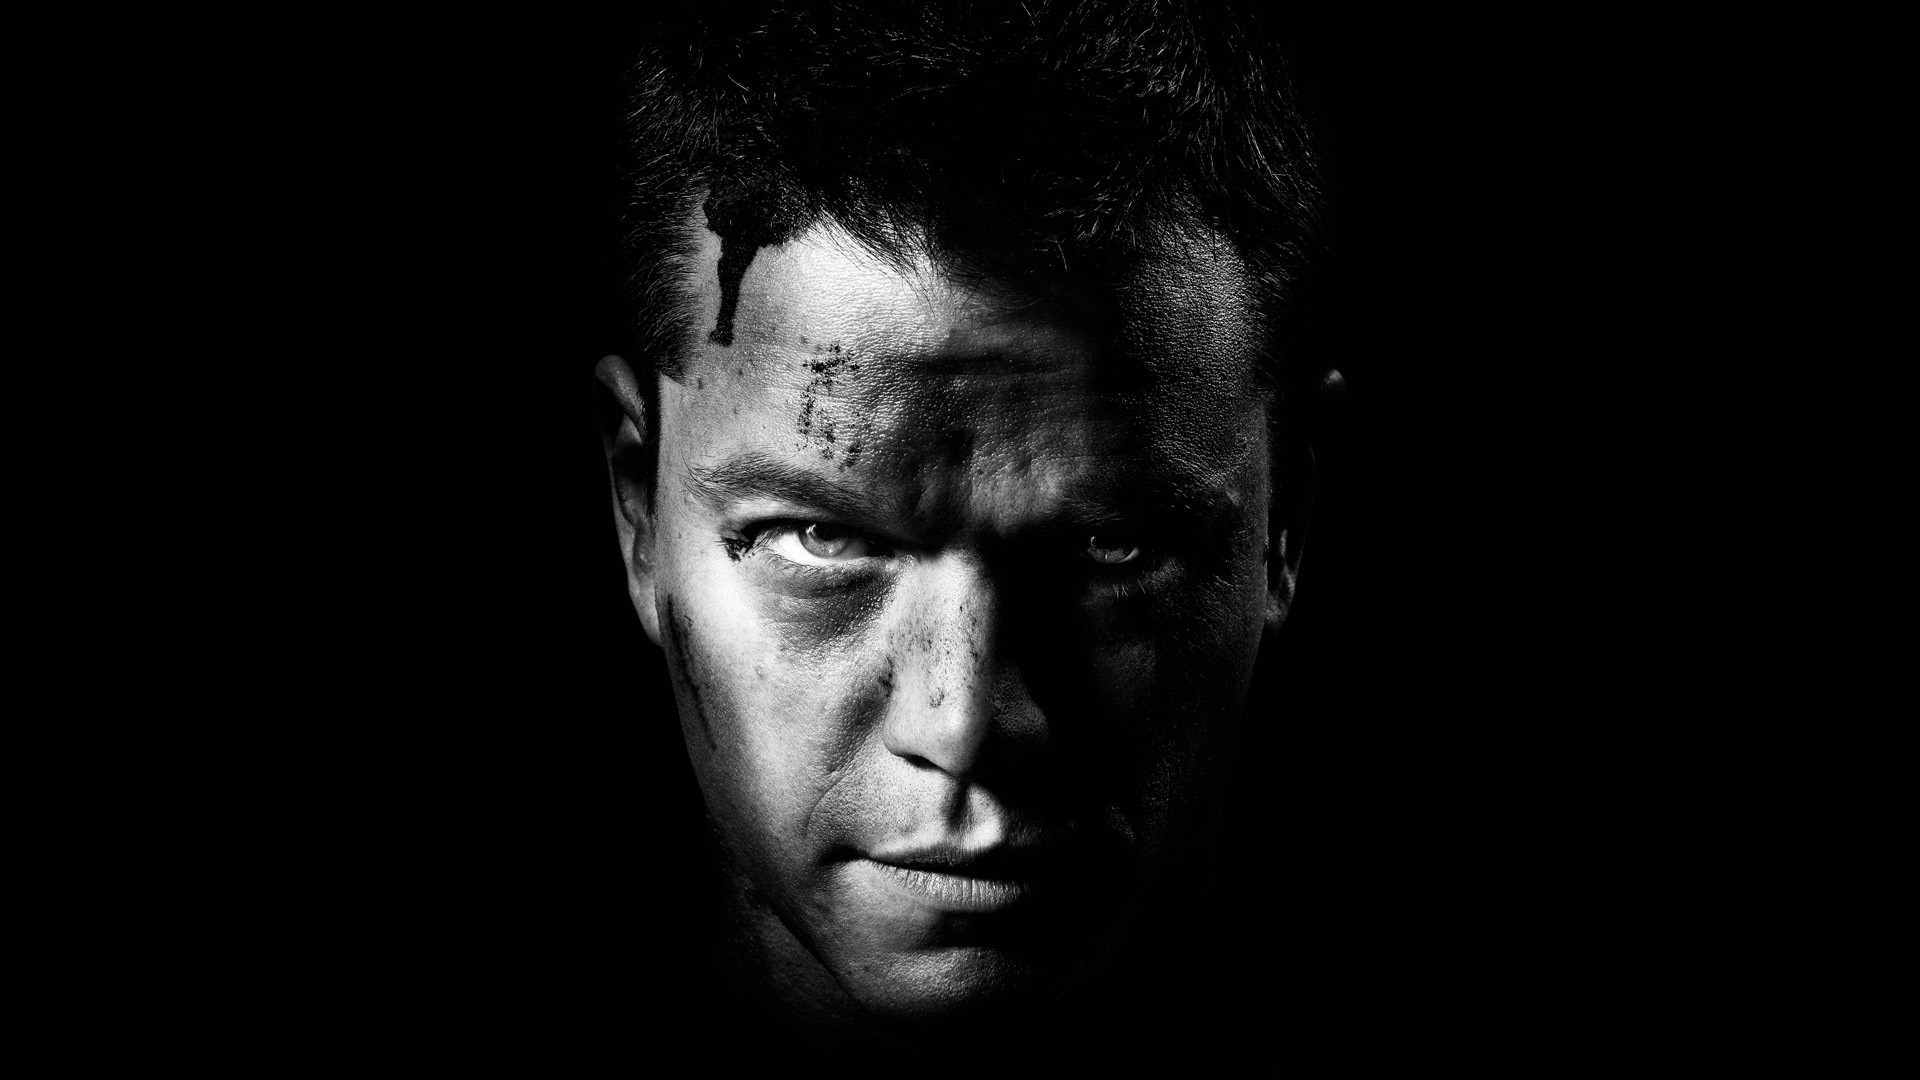 Jason Bourne Wallpapers Wallpapertag Images, Photos, Reviews